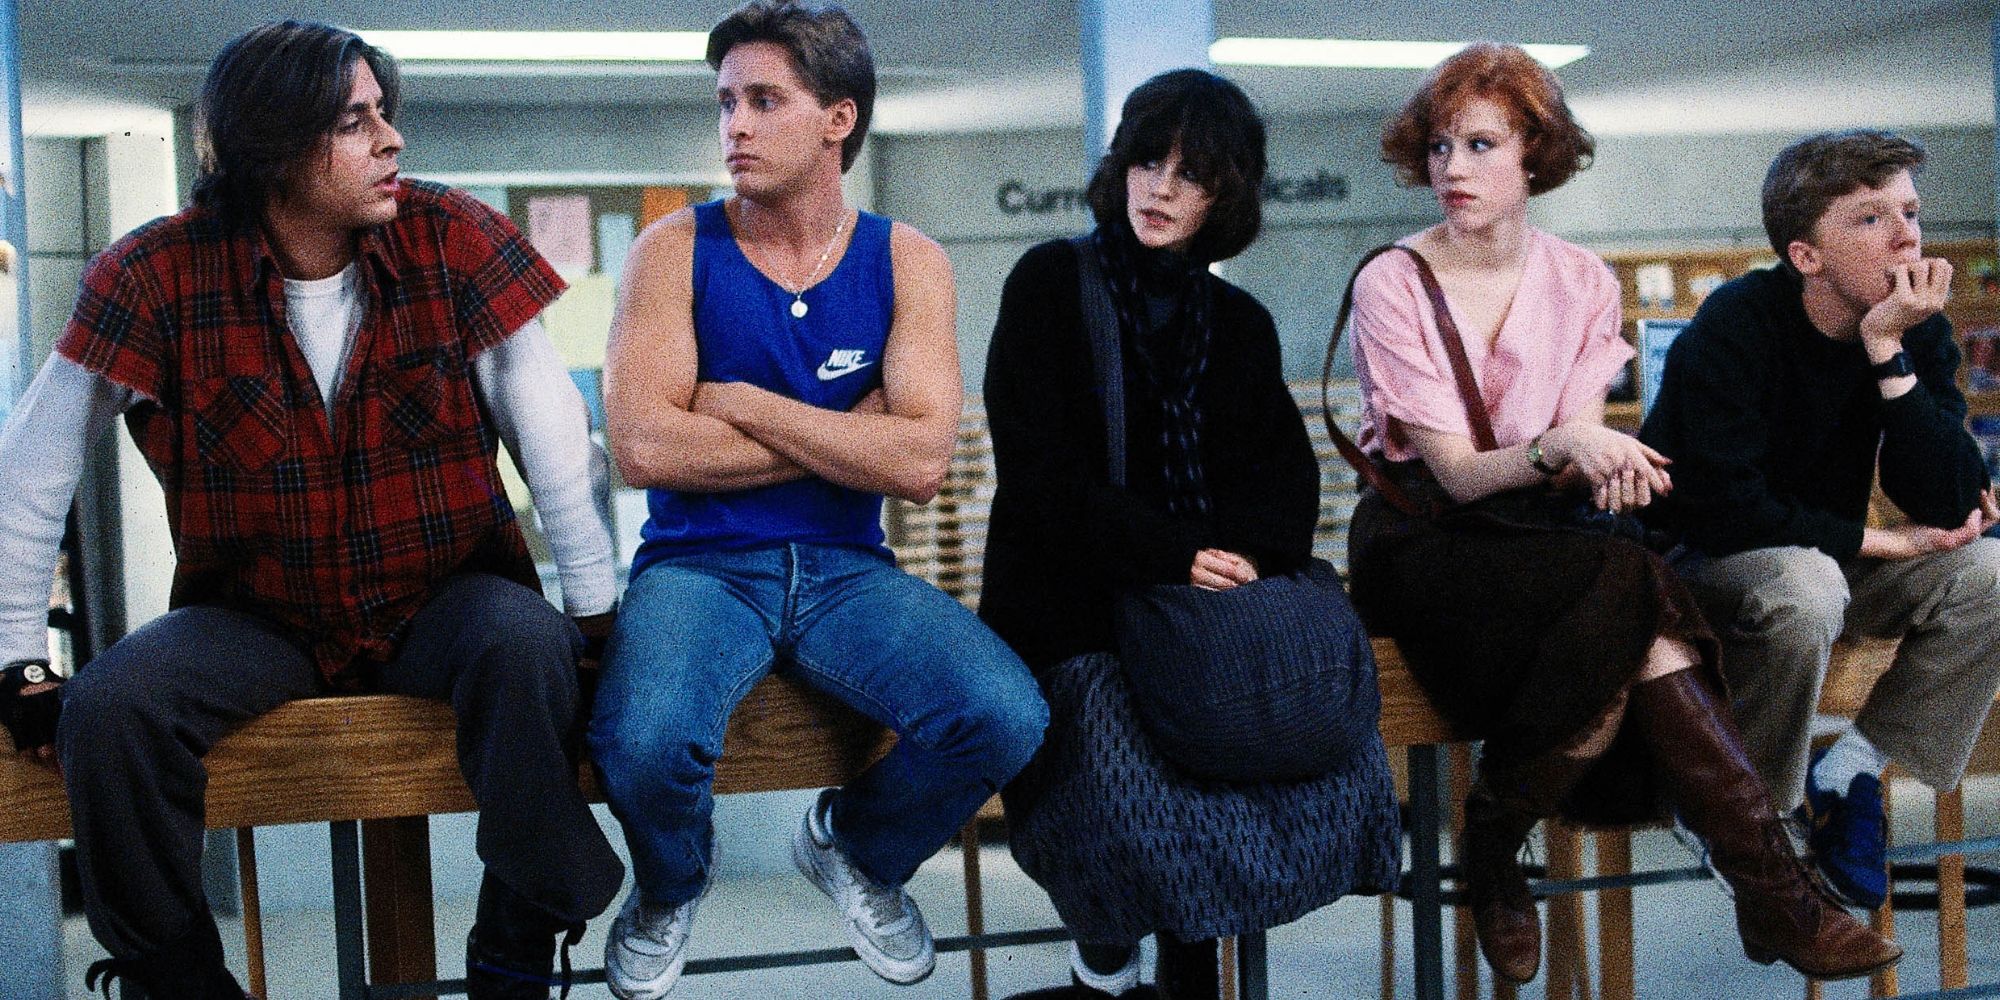 The breakfast club sitting in The Breakfast Club (1985)